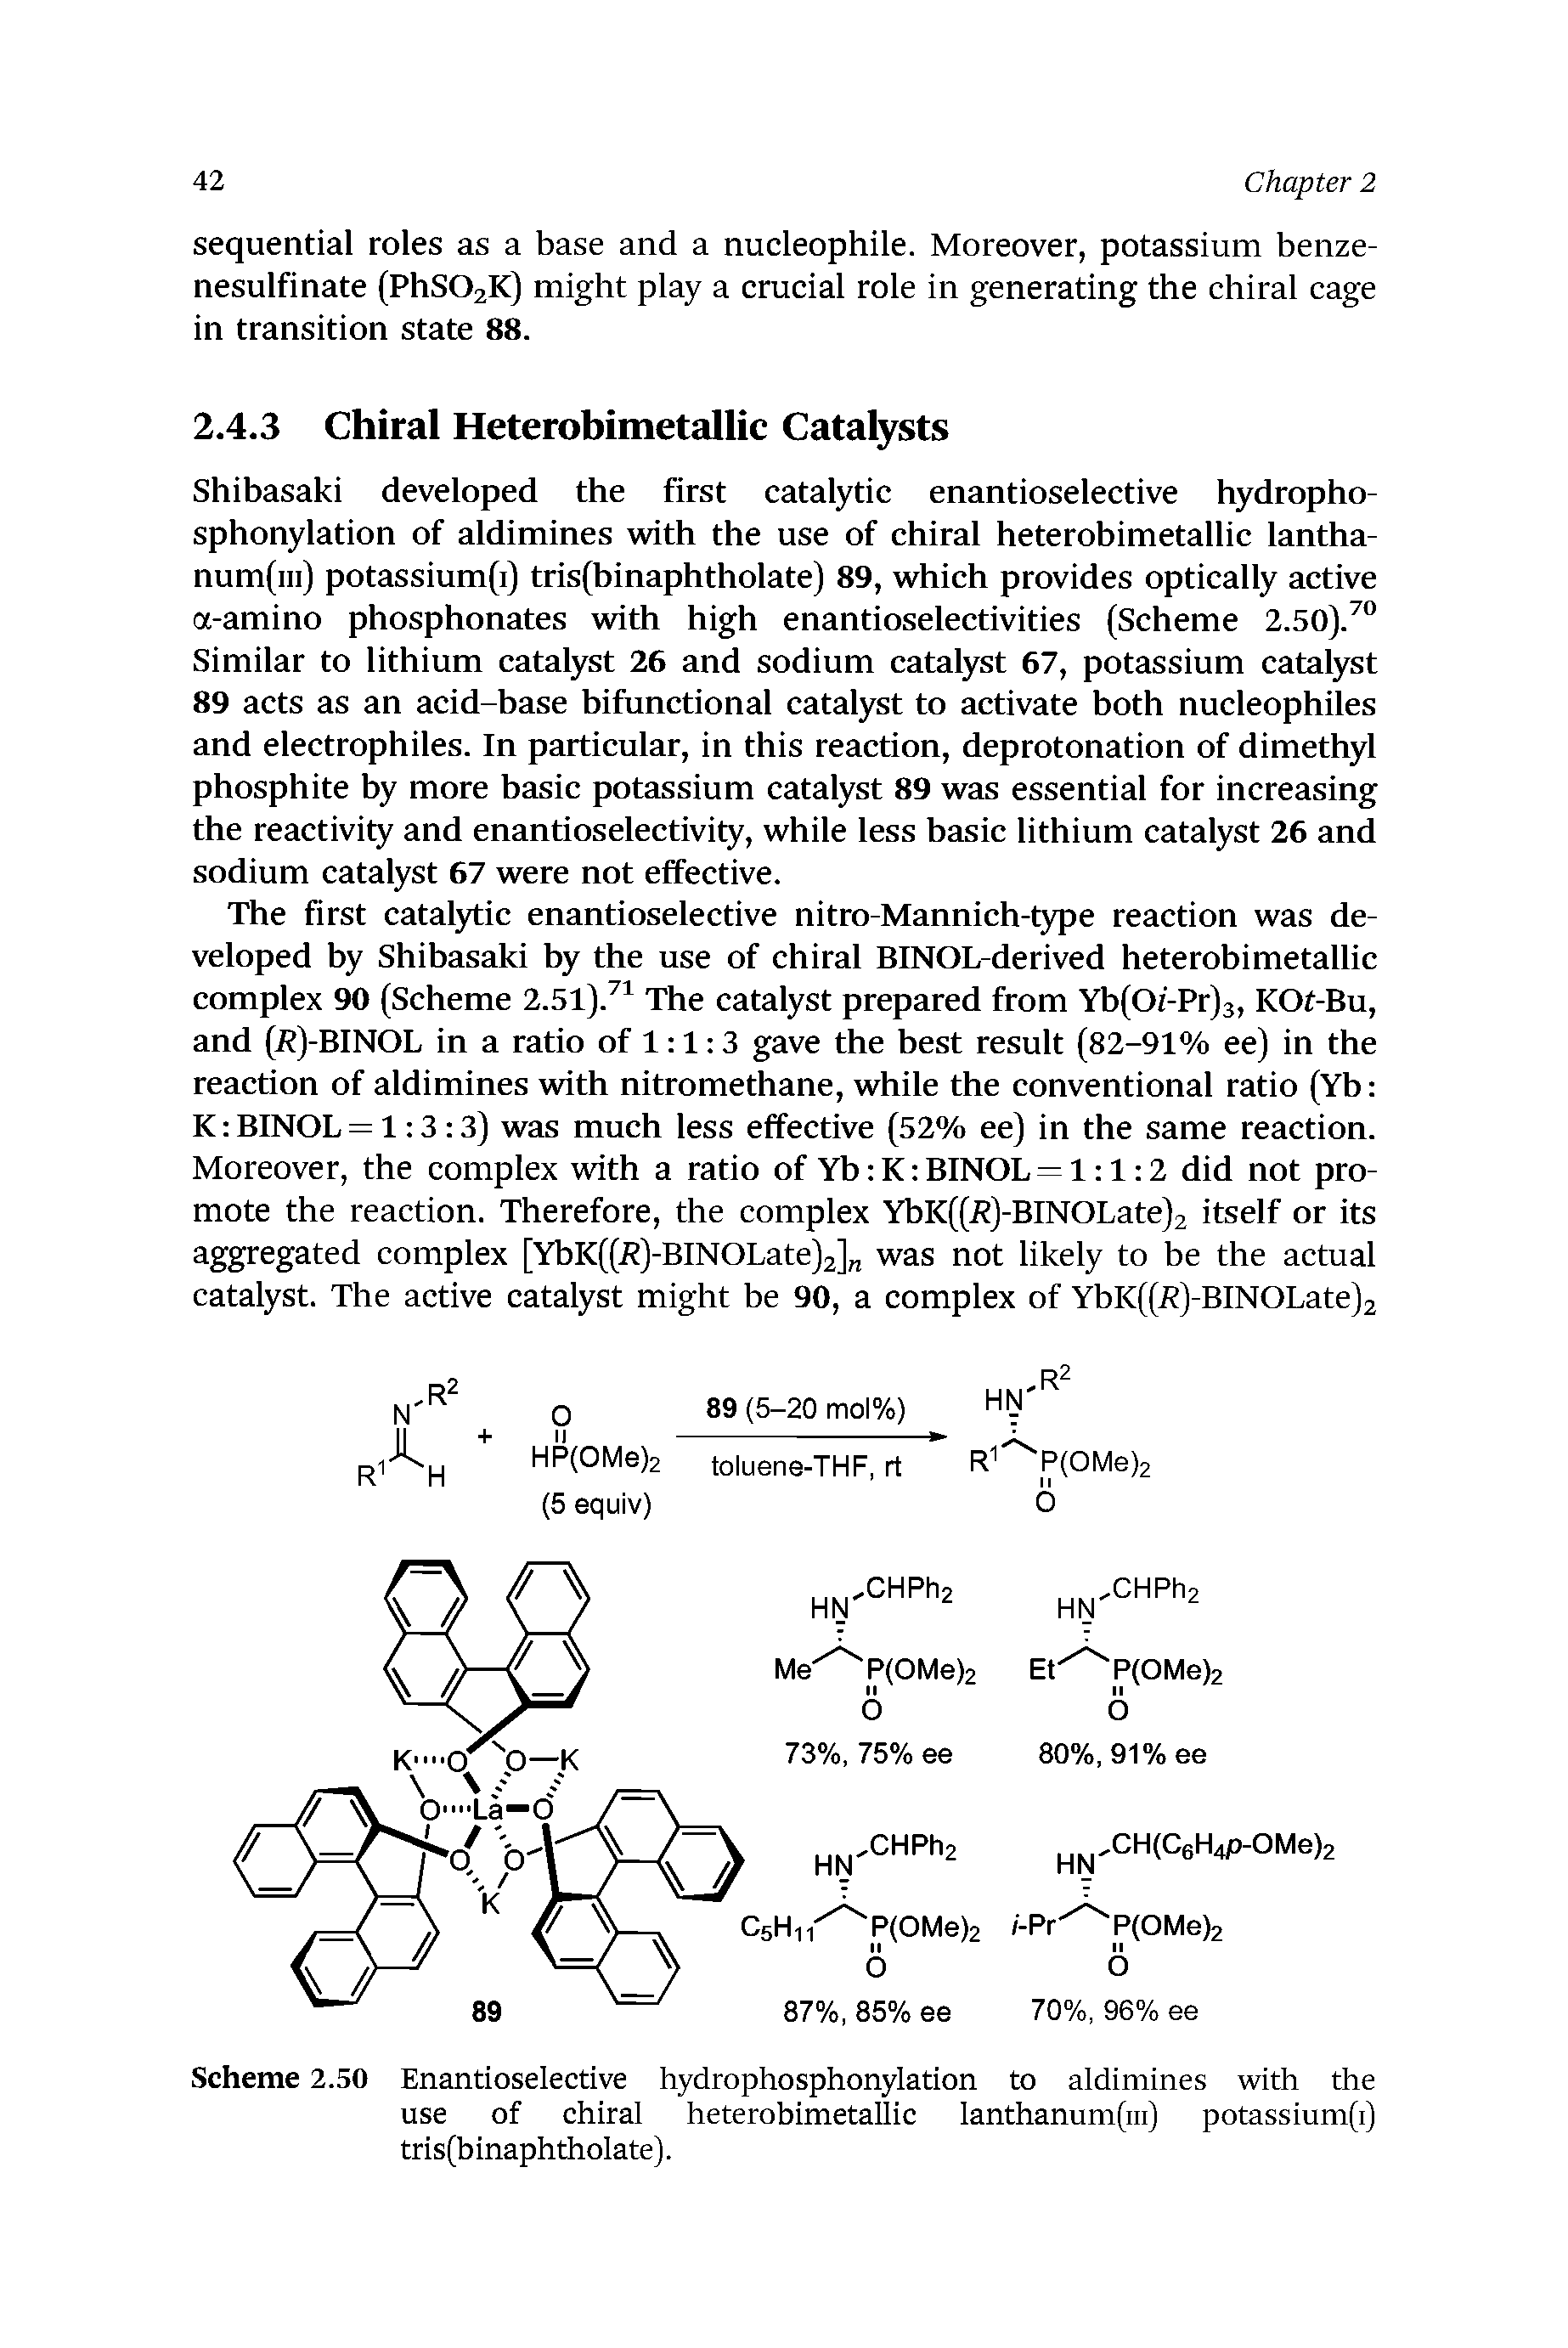 Scheme 2.50 Enantioselective hydrophosphonylation to aldimines with the use of chiral heterobimetallic lanthanum(iii) potassium(i) tris(binaphtholate).